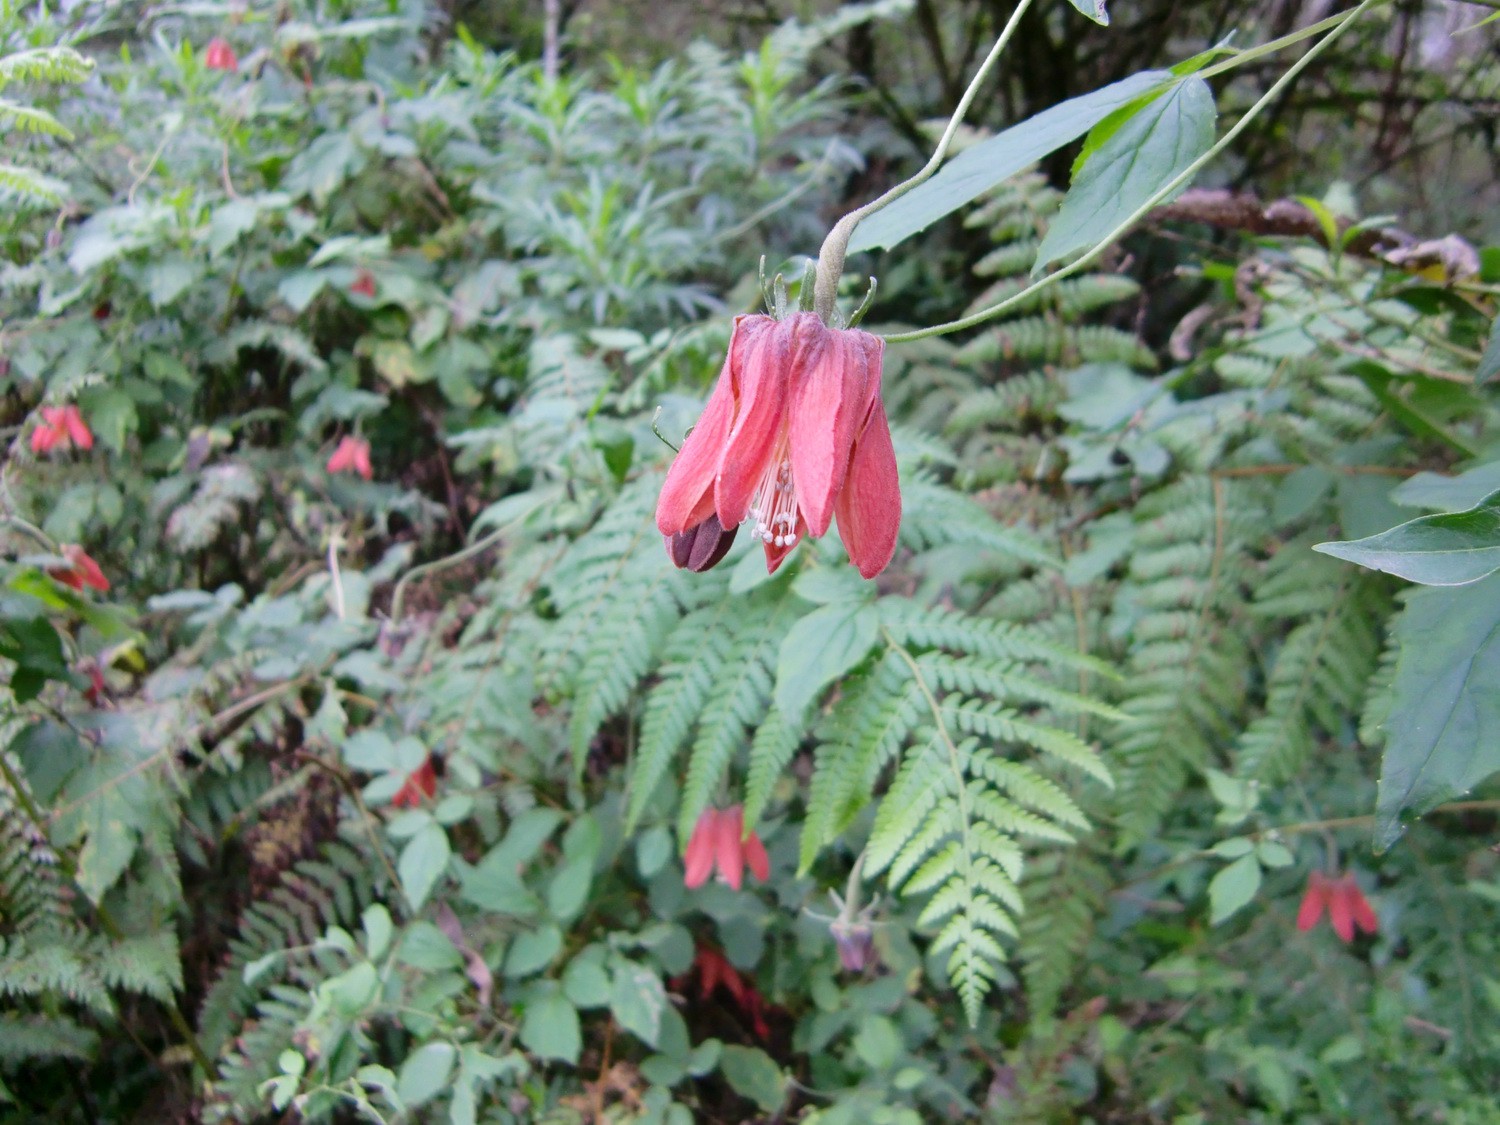 Red flowers in the Quebrada San Lorenzo